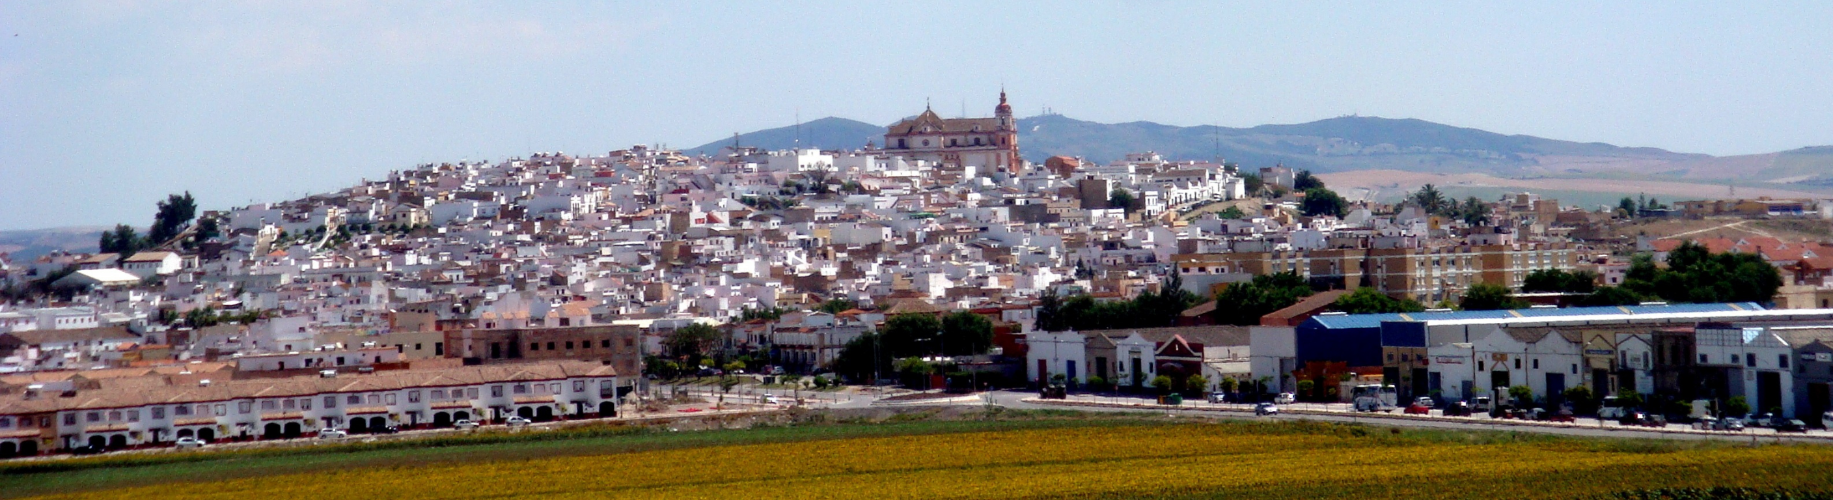 Las Cabezas de San Juan (Sevilla)